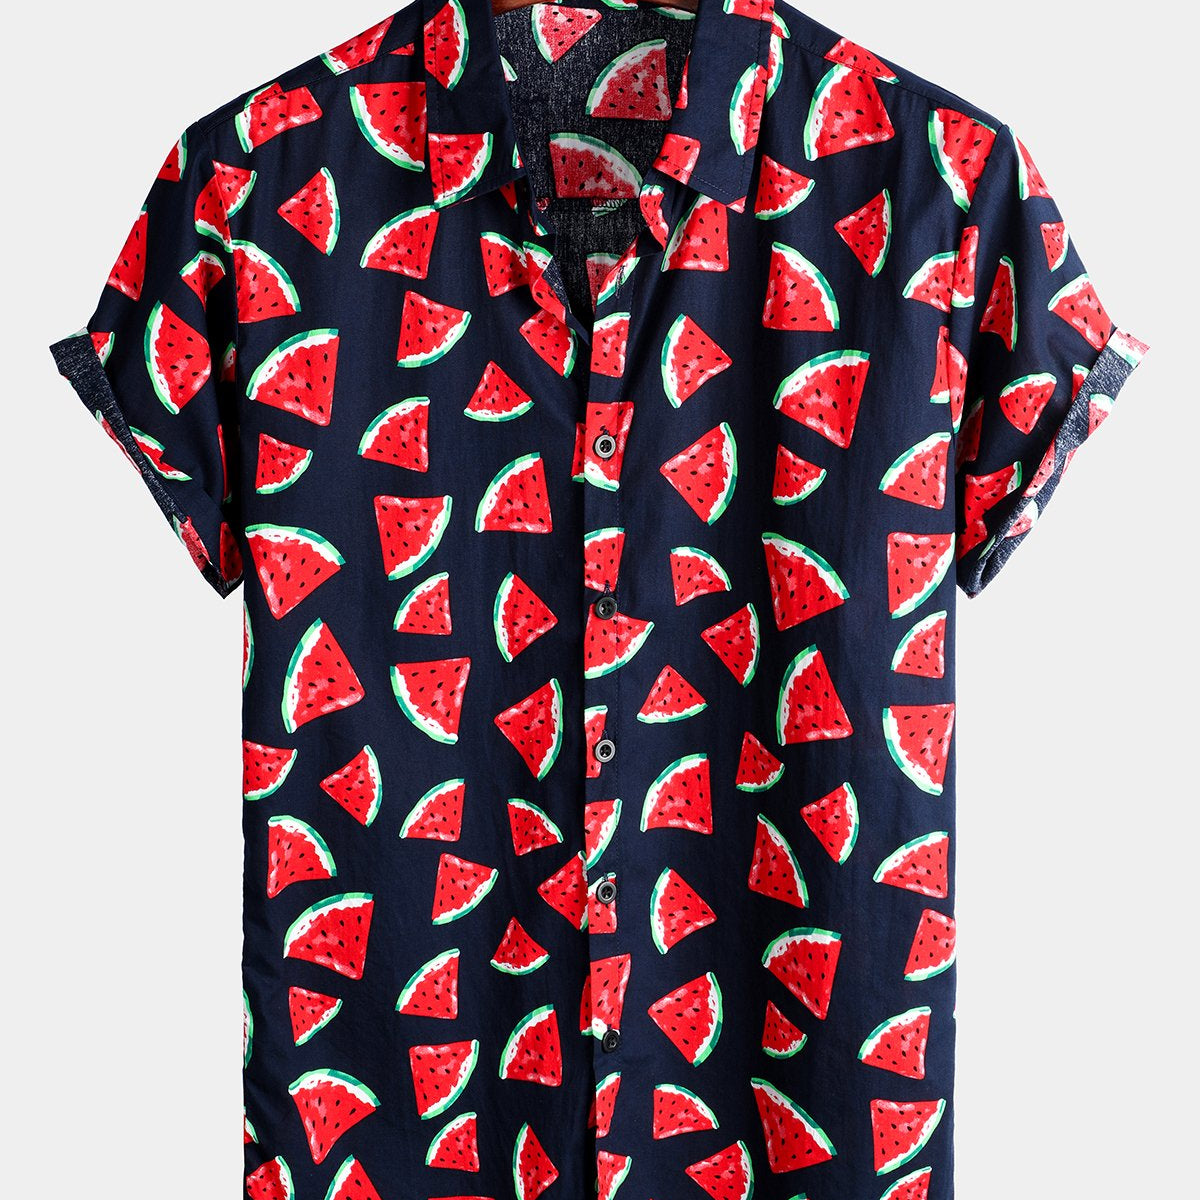 Men's Pink Watermelon Tropical Hawaii Fruit Print Cotton Shirt